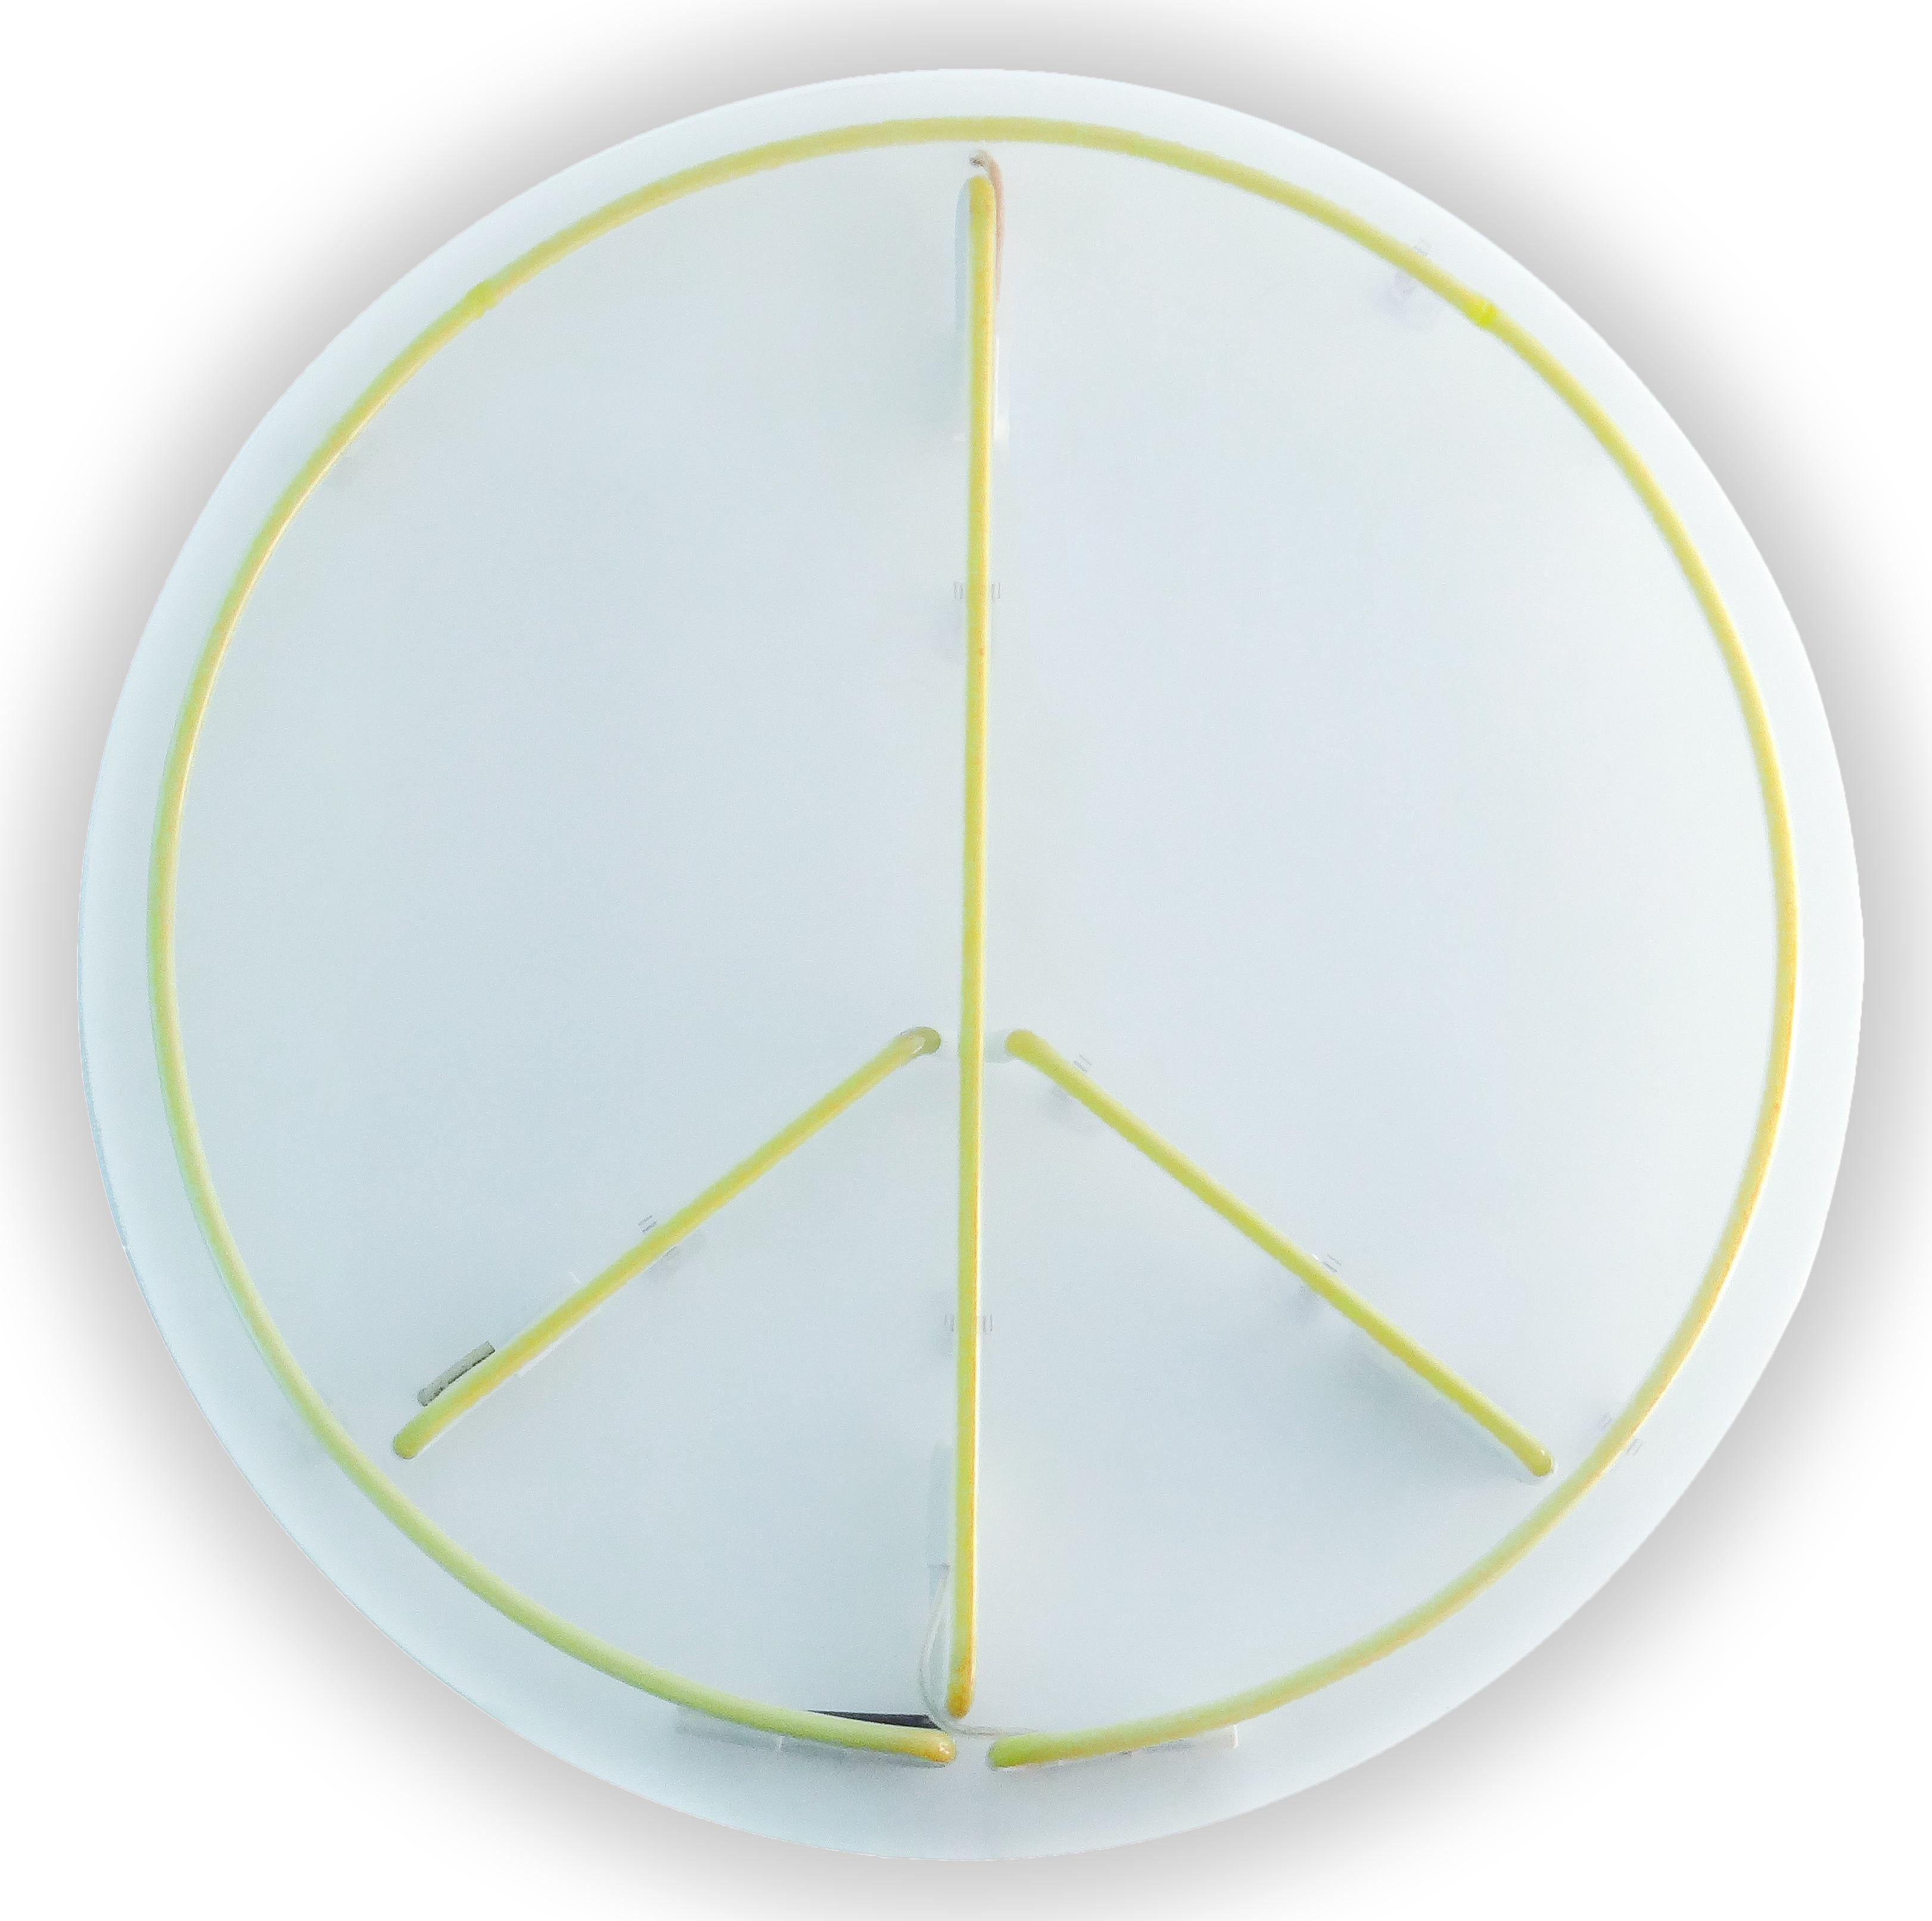 Designed in 2015 produced, circa 2016
Yellow neon- white plexiglass

Measures: 36